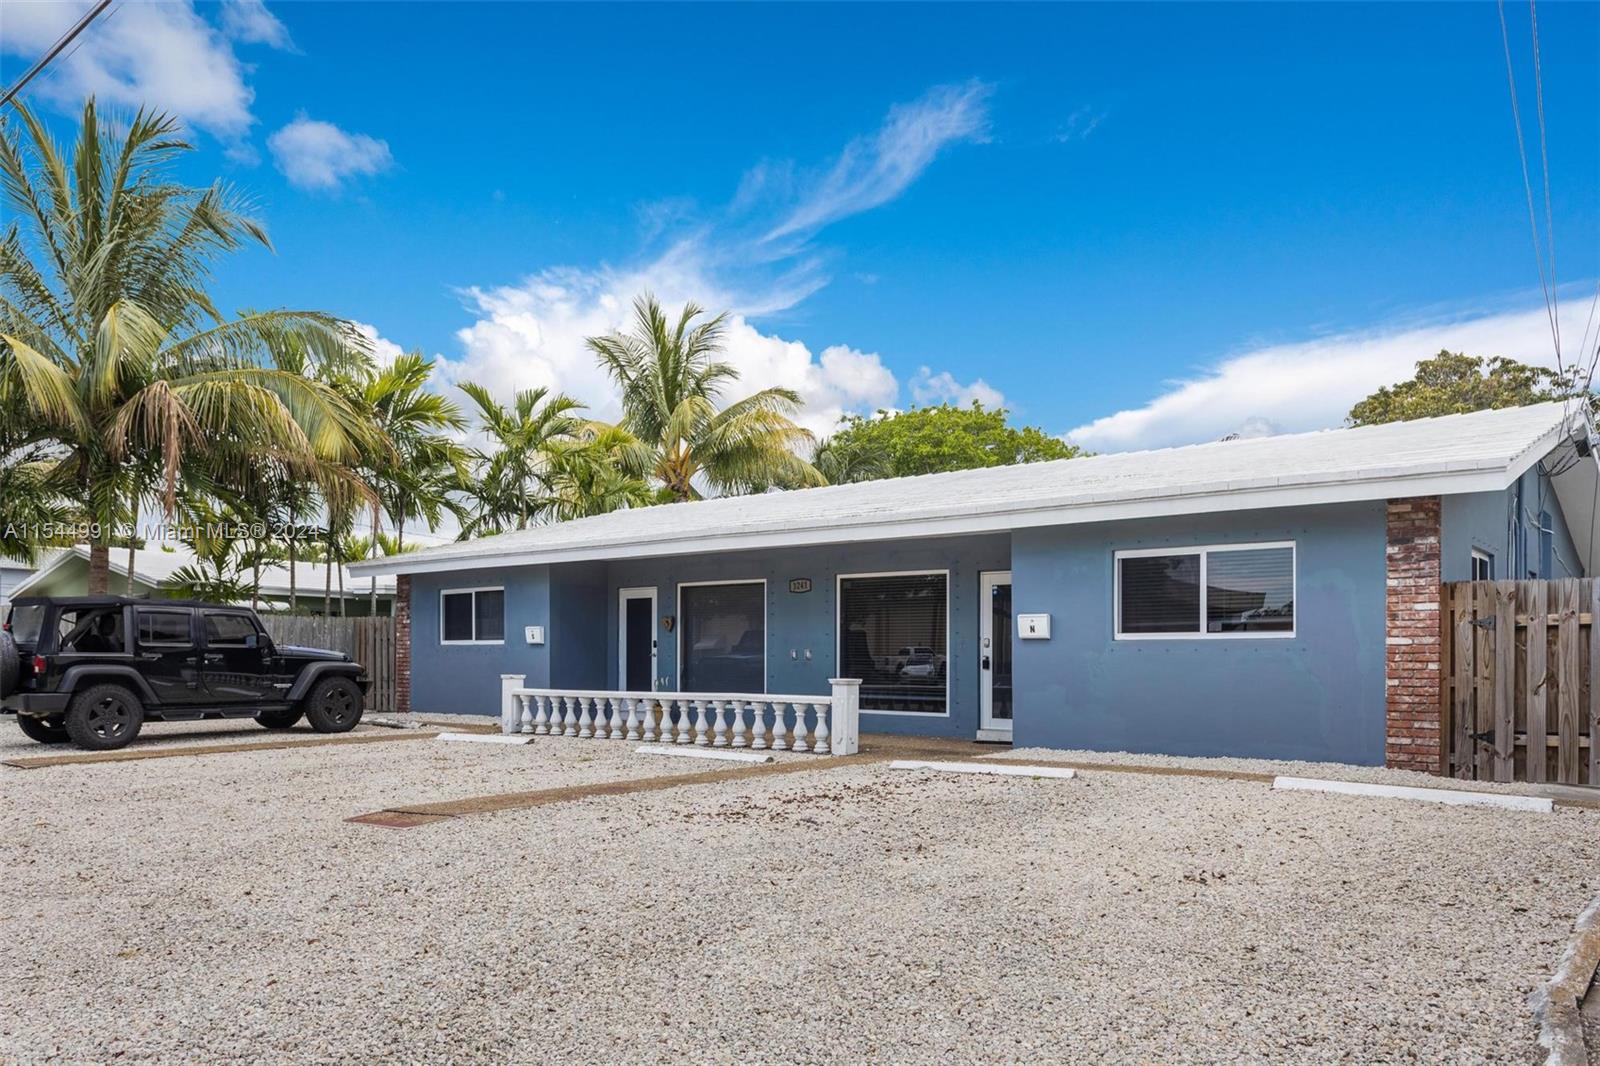 Rental Property at 3241 Ne 17th Ave, Oakland Park, Miami-Dade County, Florida -  - $950,000 MO.